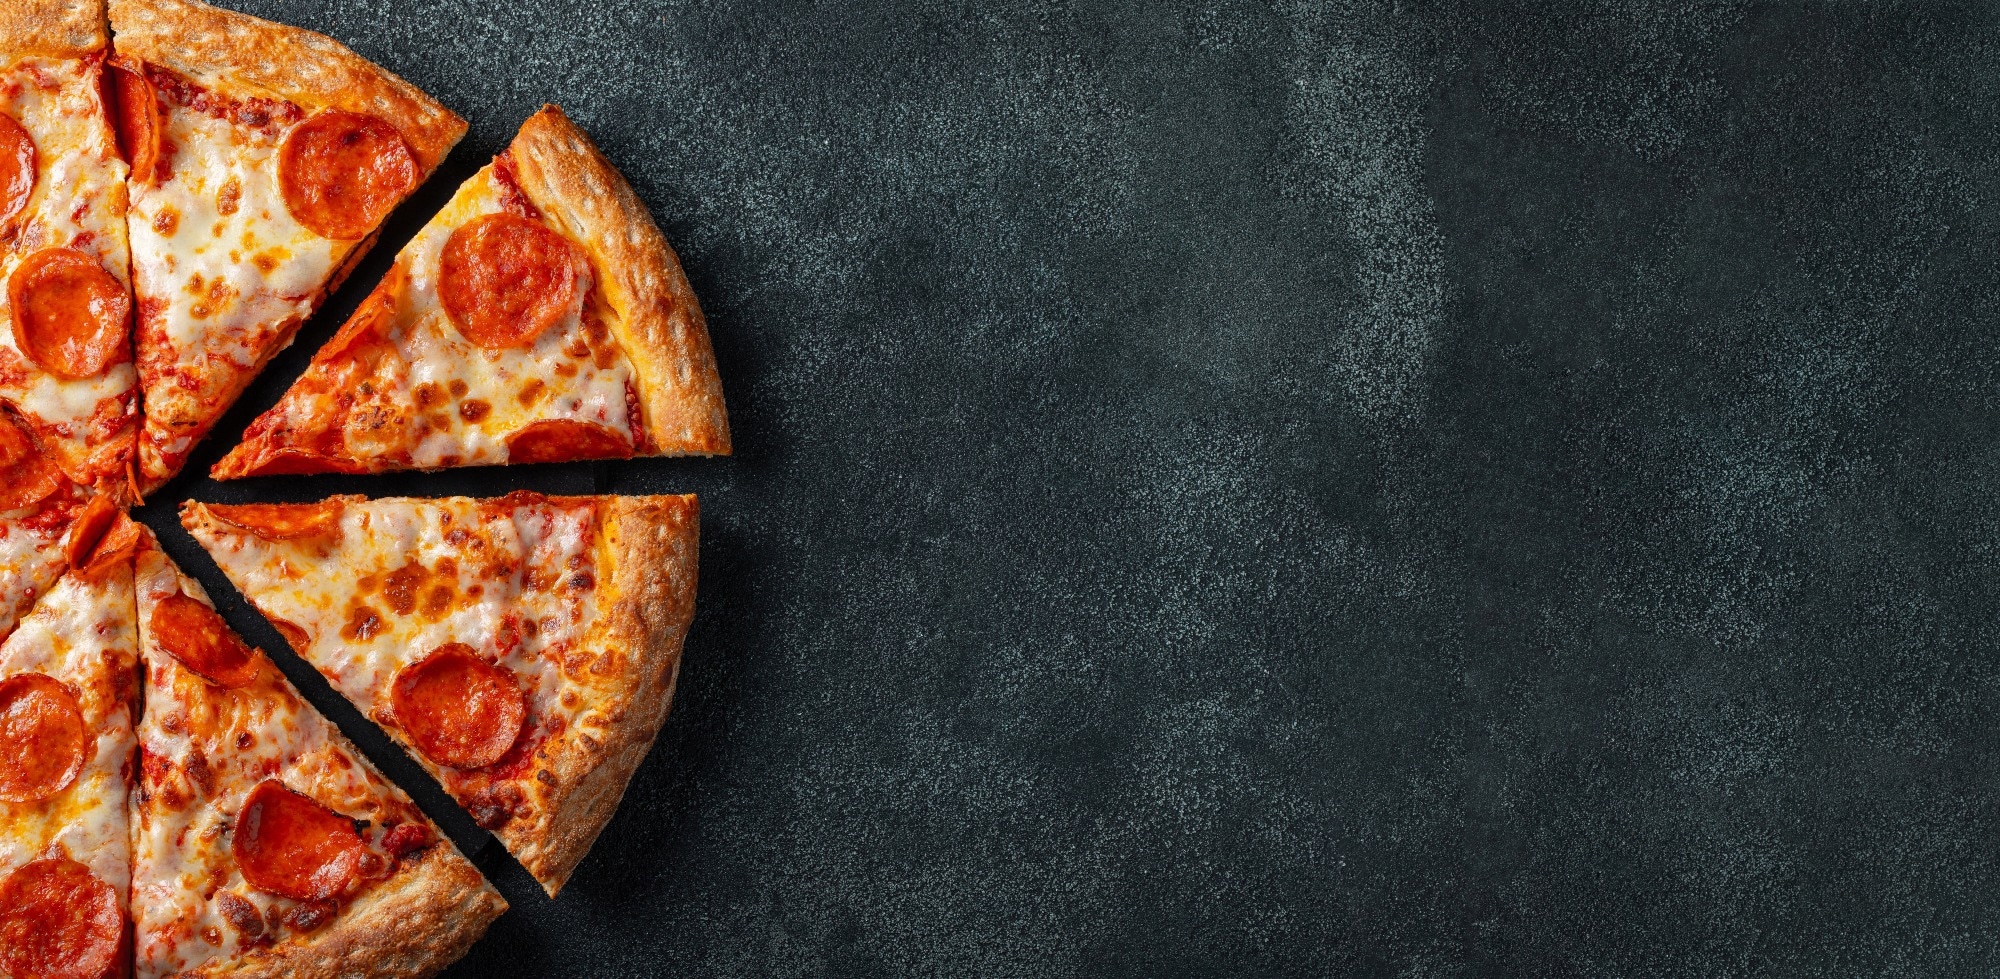 Study: Does Pizza Consumption Favor an Improved Disease Activity in Rheumatoid Arthritis? Image Credit: VasiliyBudarin/Shutterstock.com